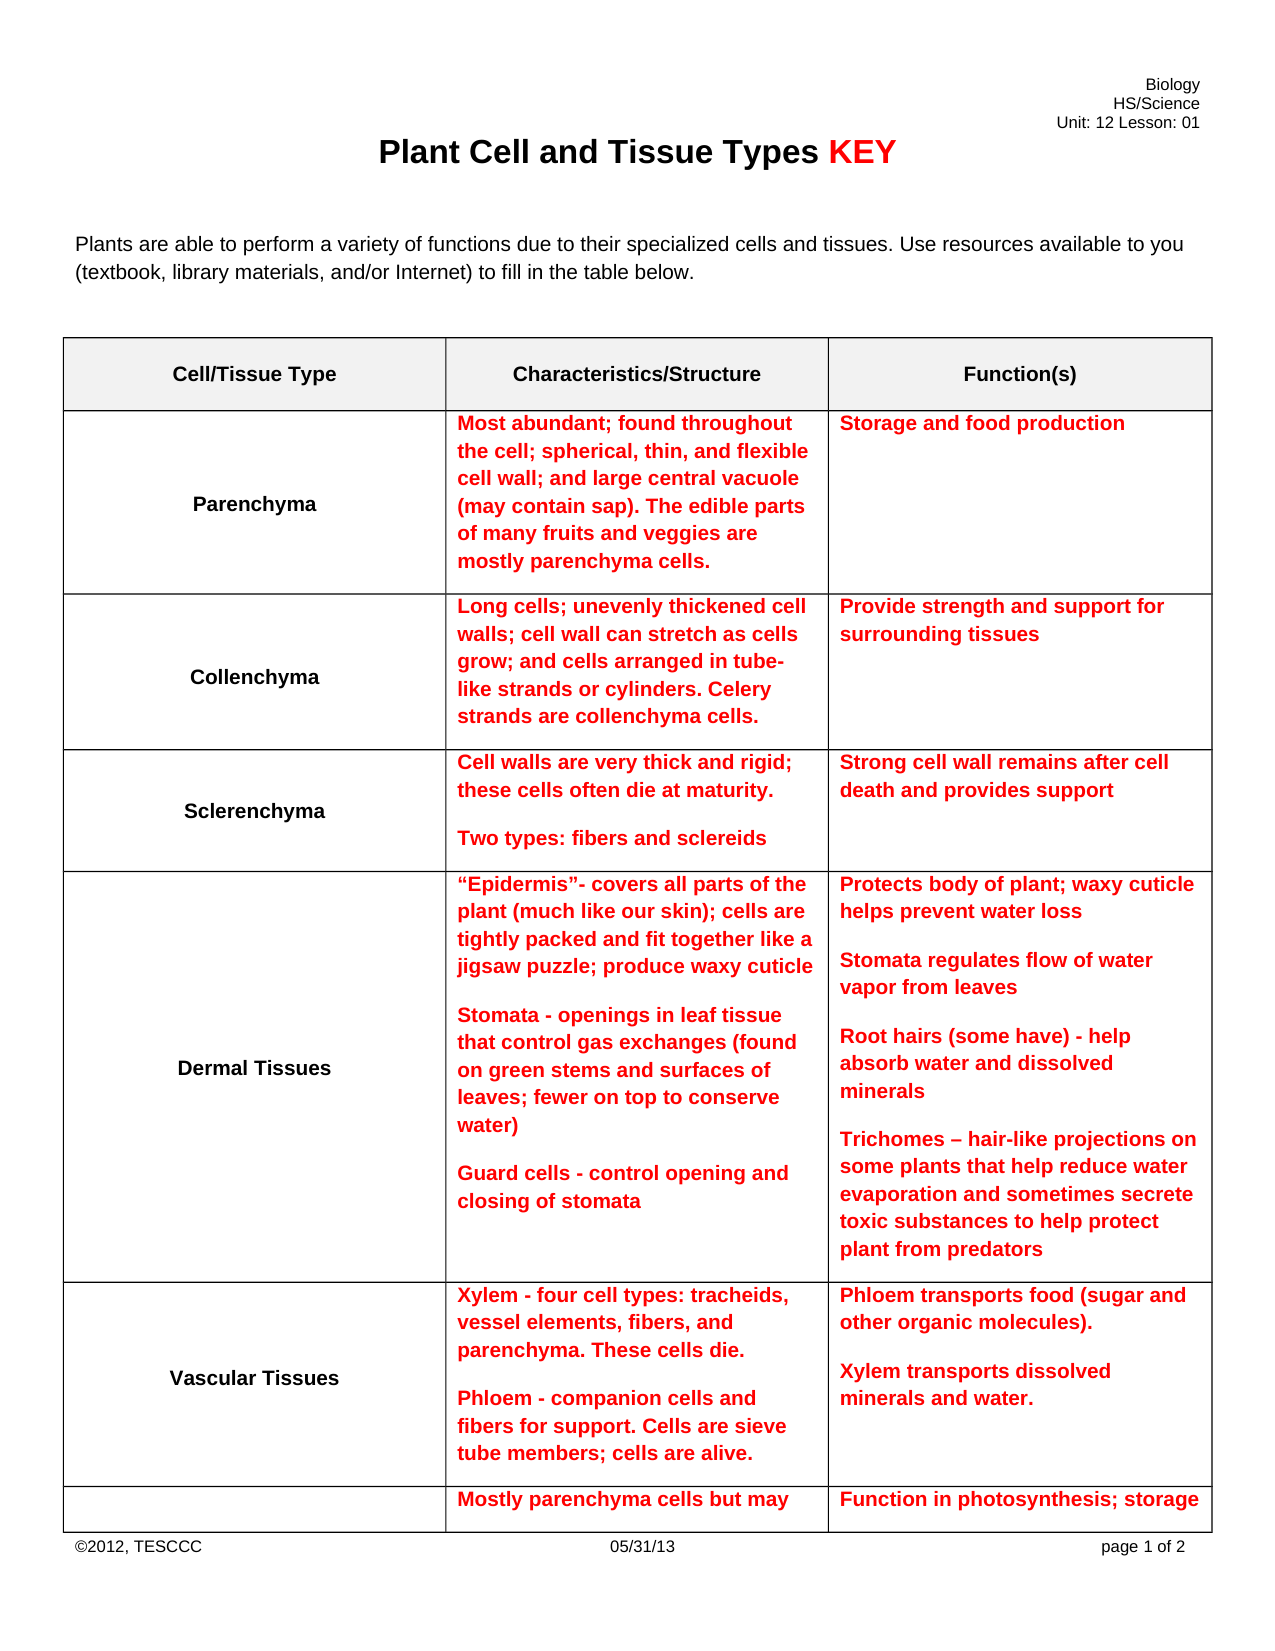 Types Of Tissues Worksheet Answers - Worksheet List Intended For Types Of Tissues Worksheet